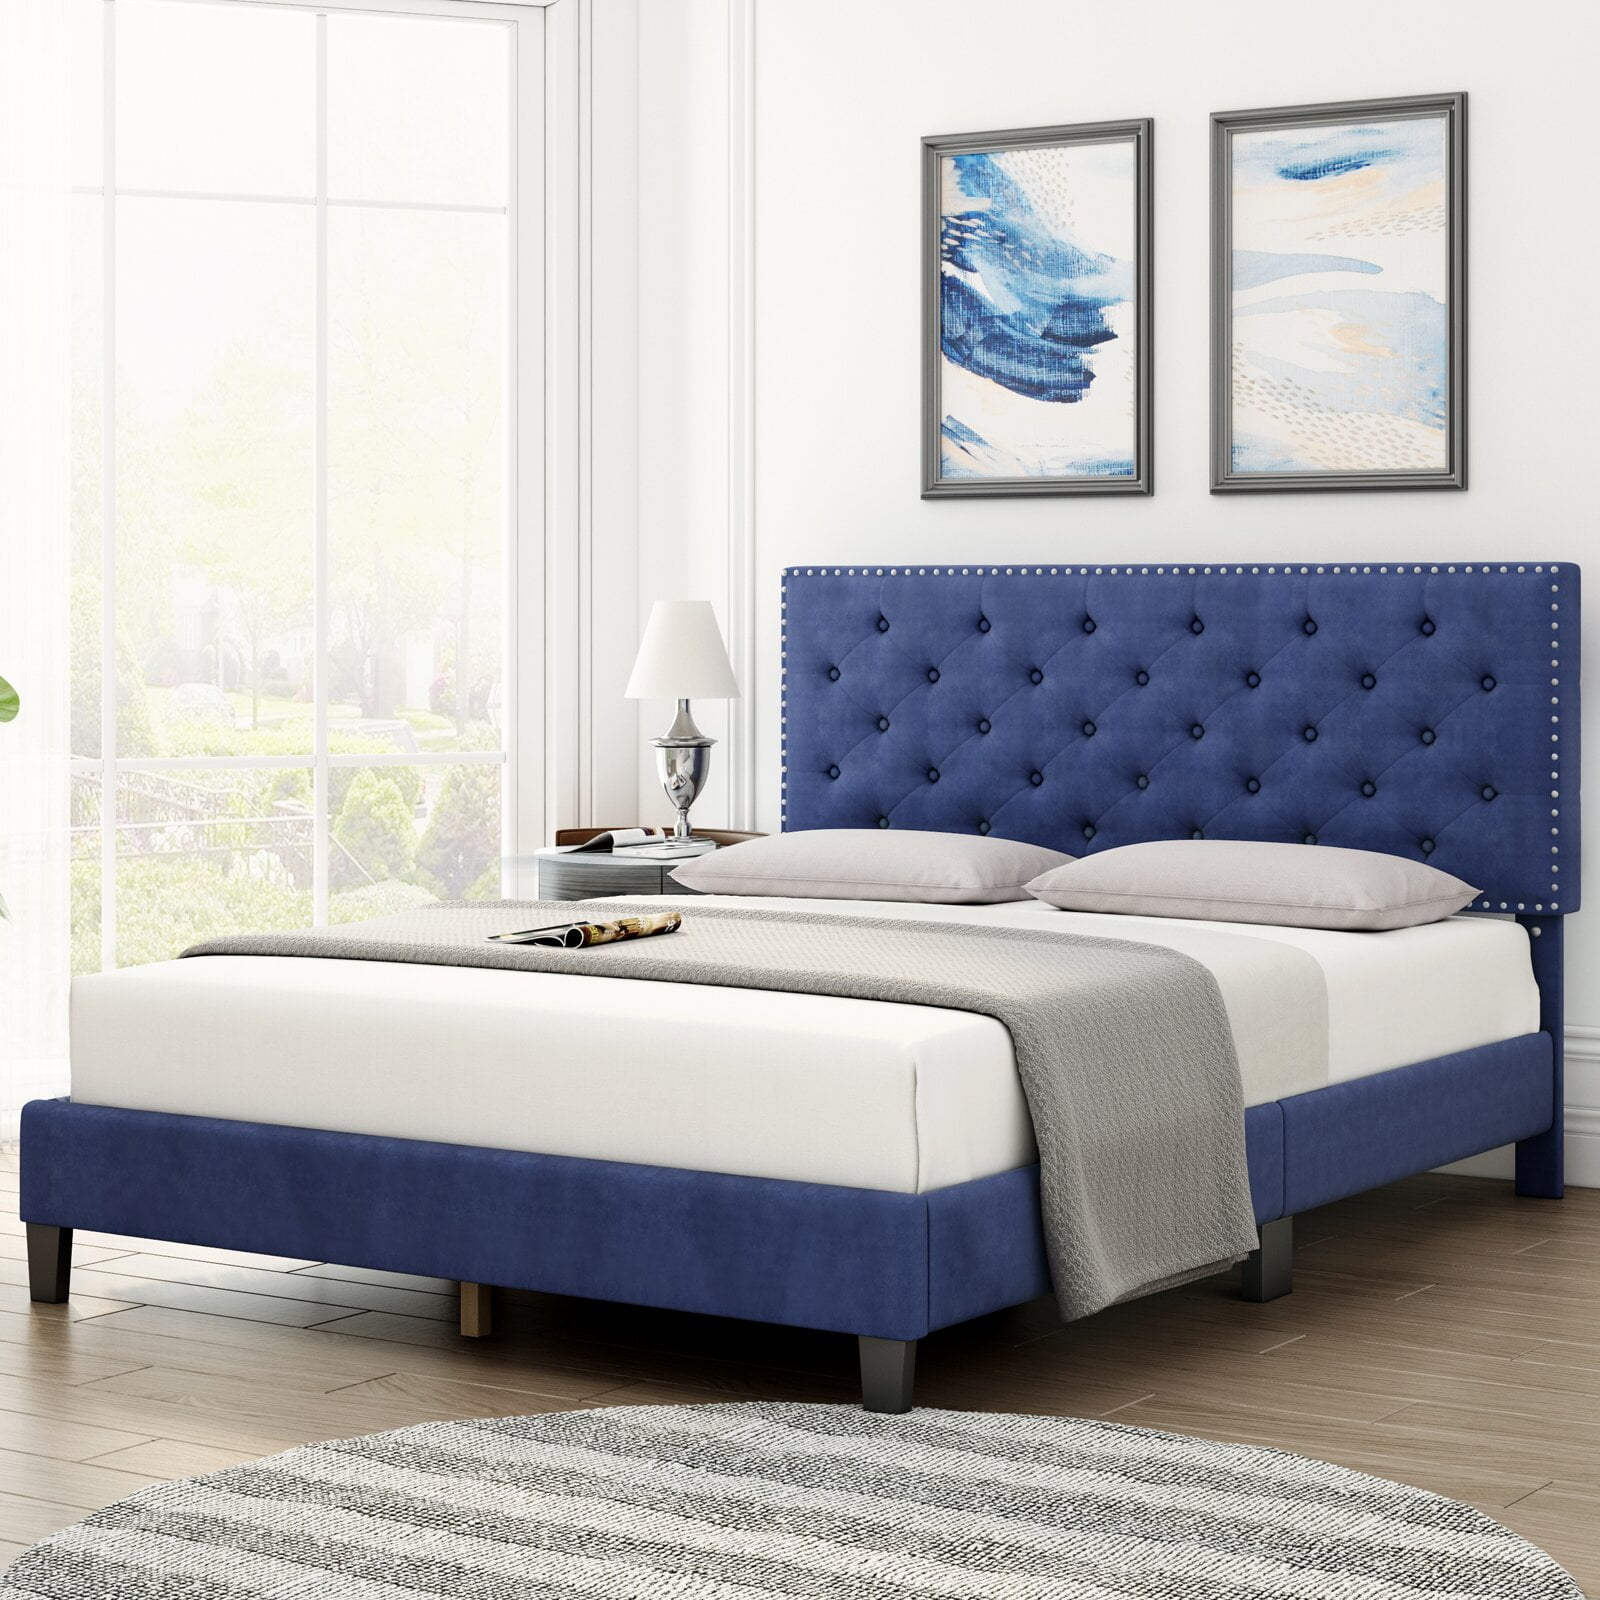 Homfa Full Size Bed, Modern Upholstered Platform Bed Frame with ...